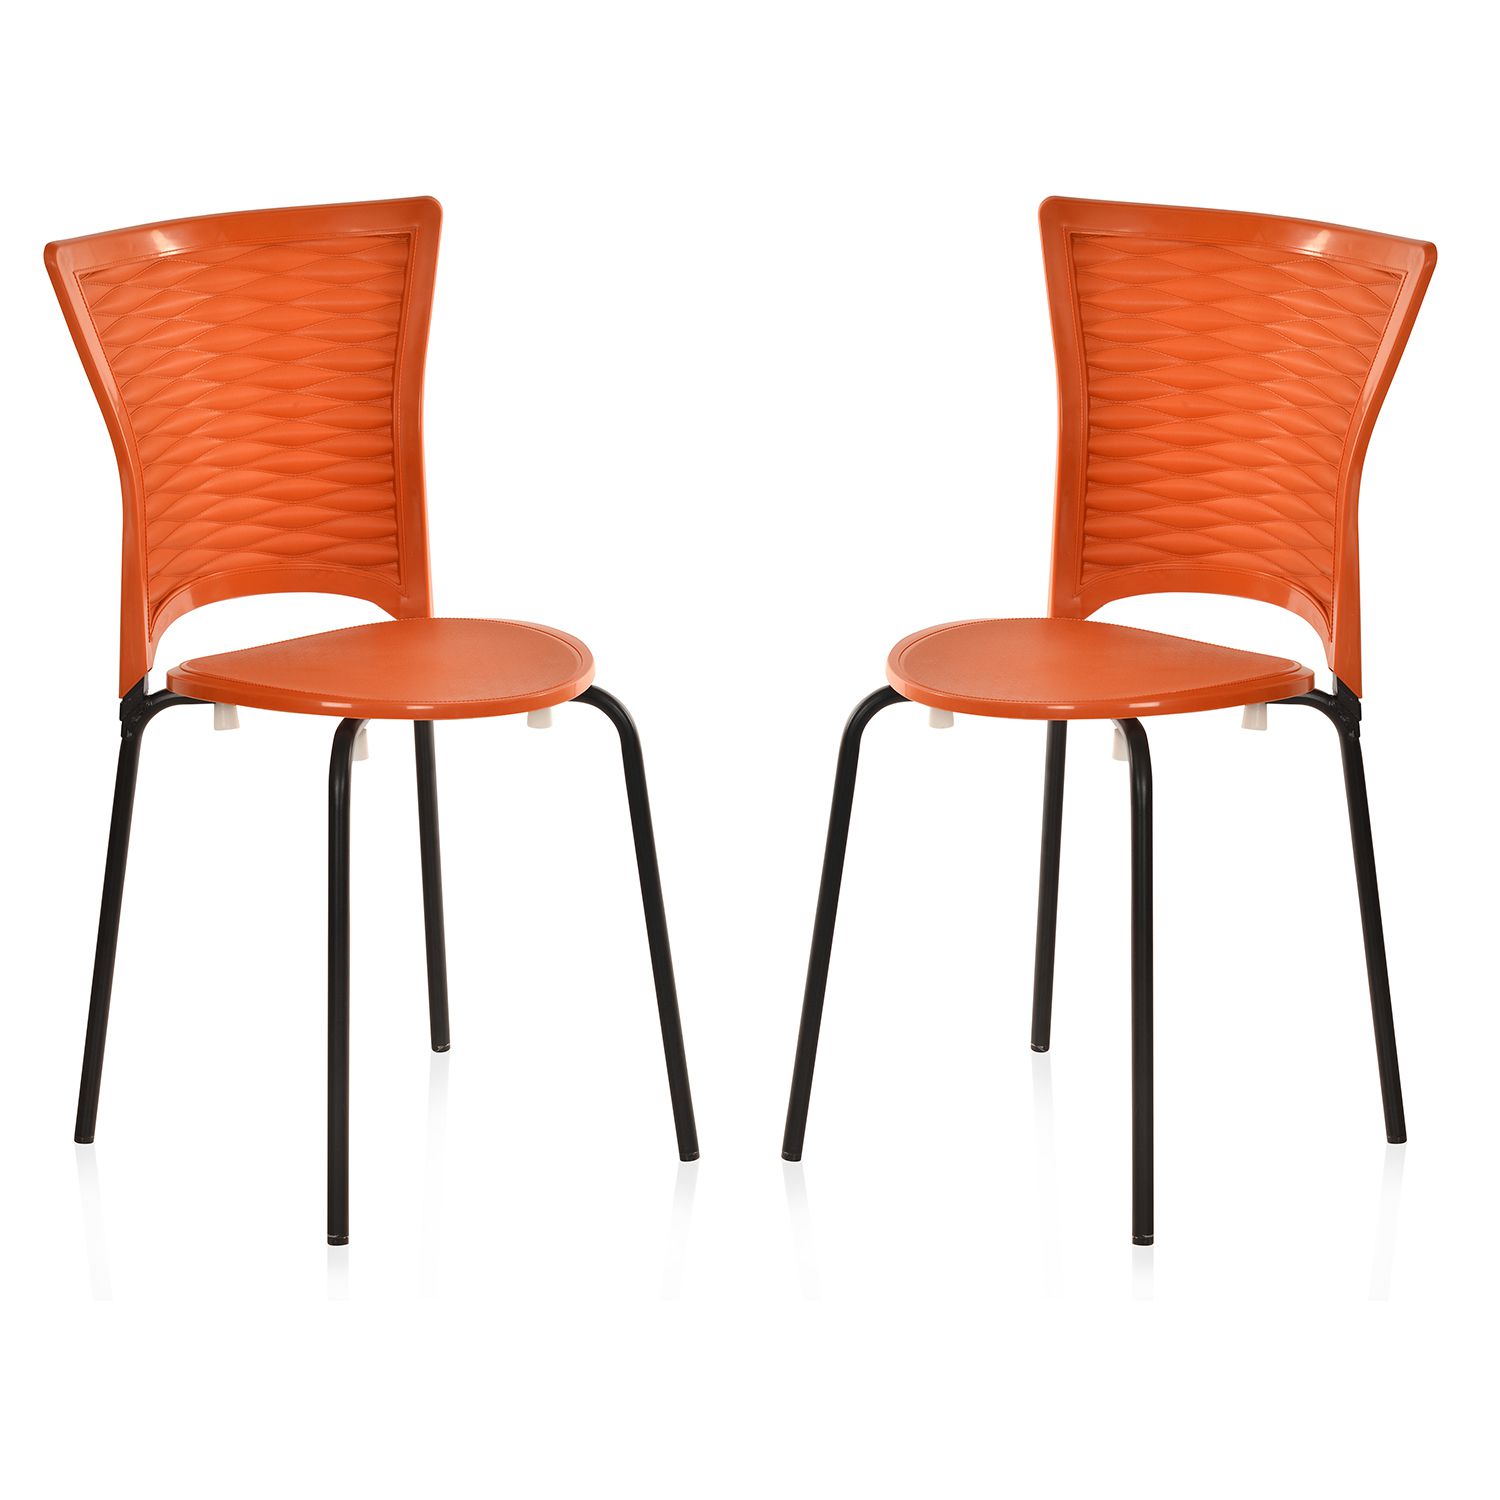 Nilkamal Novella 14 Plastic Chair - Set of 2 - Buy Nilkamal Novella 14